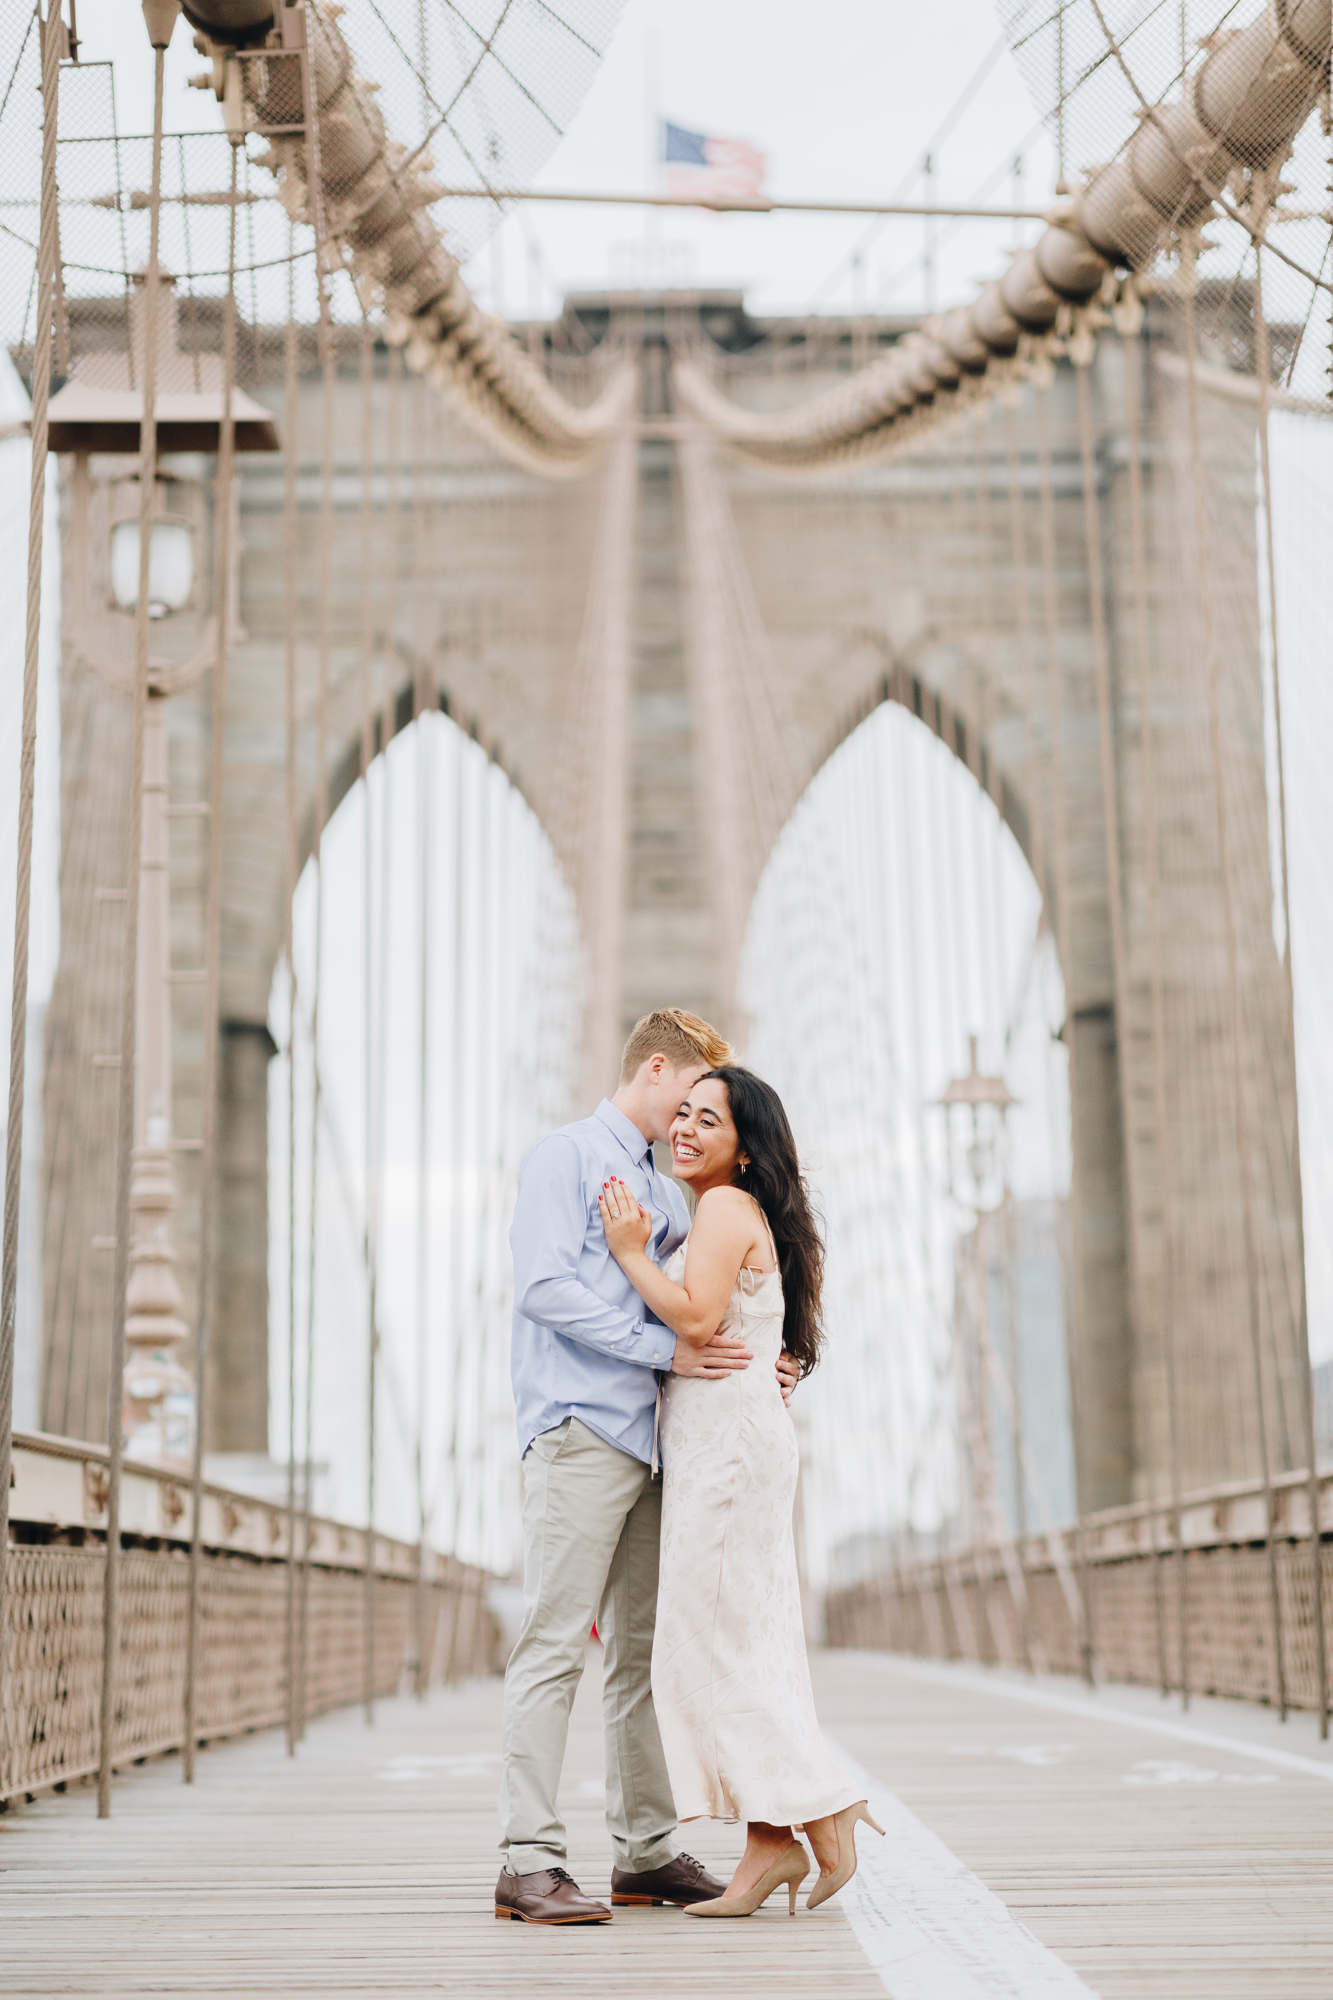 Adorable Summertime Brooklyn Bridge Engagement Photos